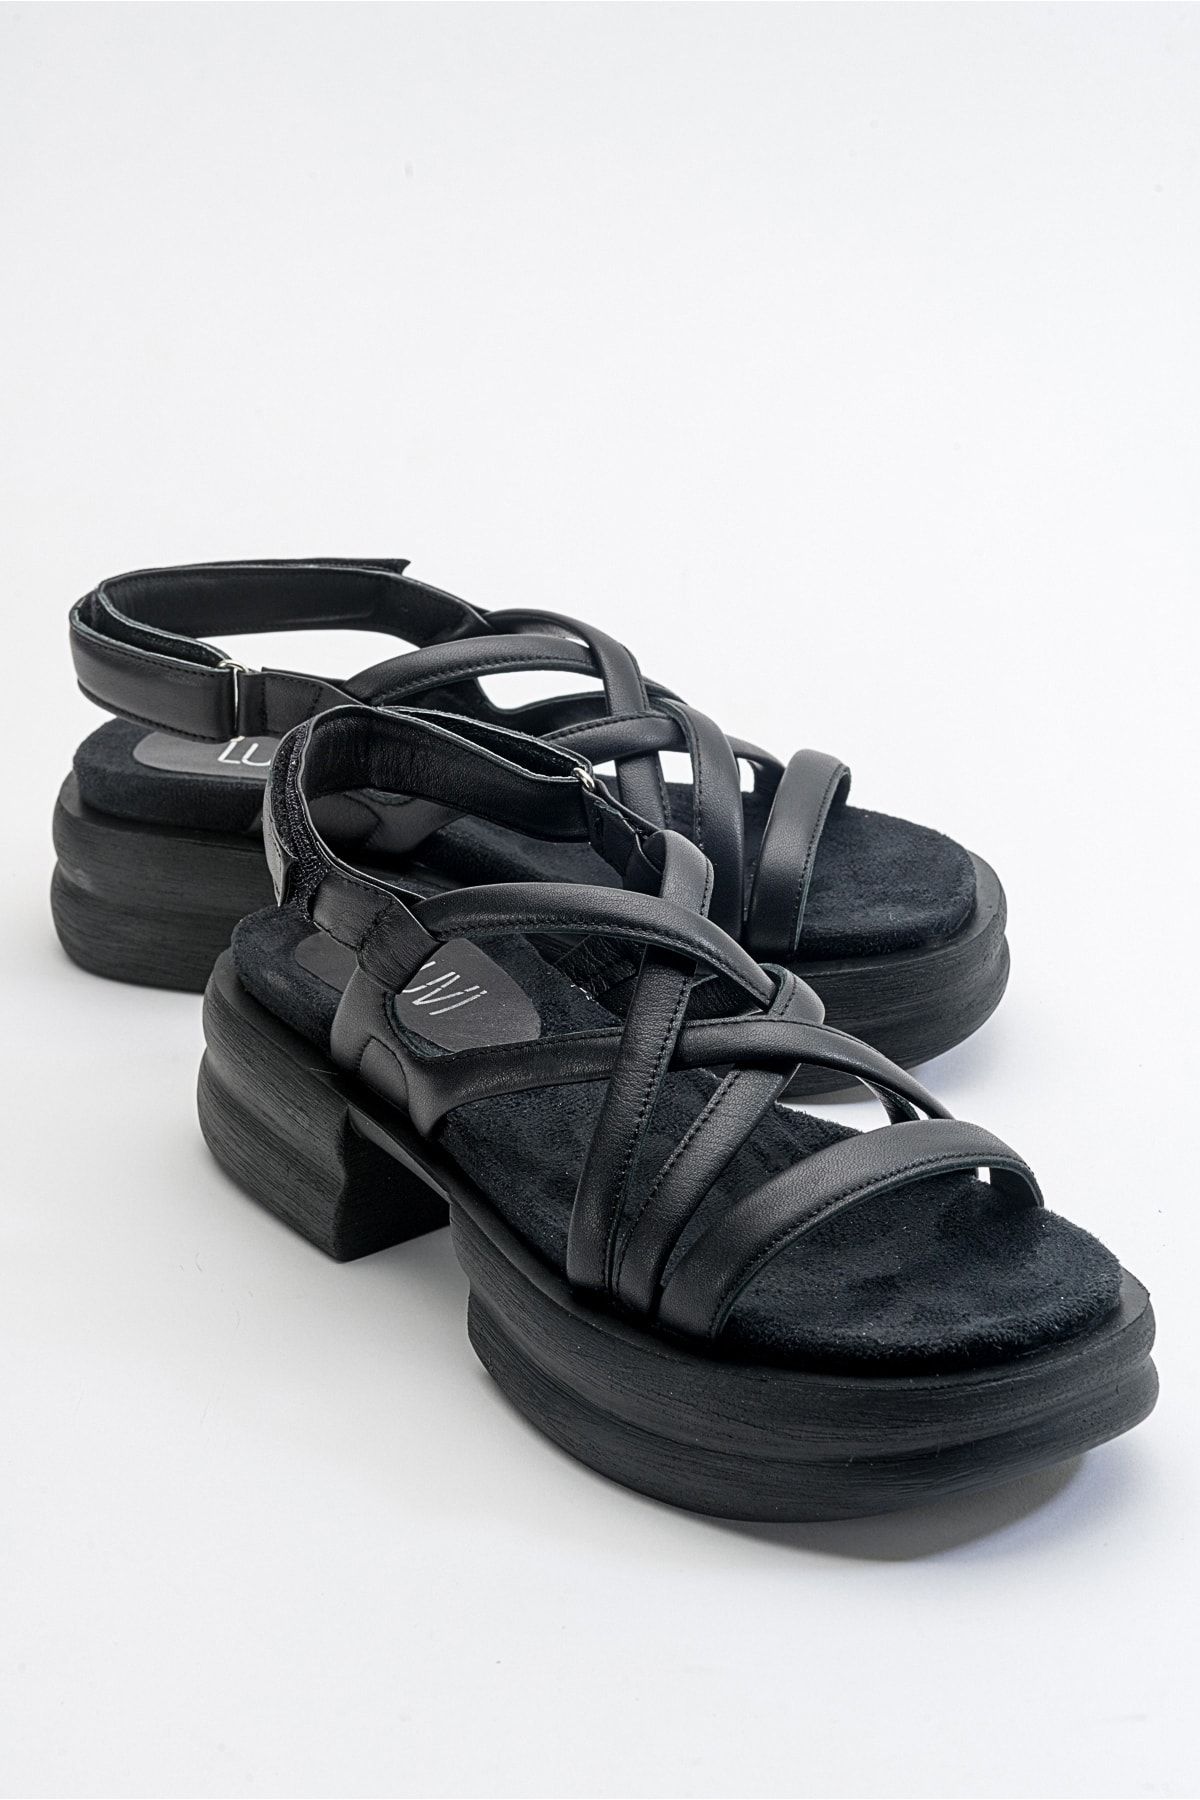 luvishoes Senza Siyah Cilt Hakiki Deri Kadın Sandalet